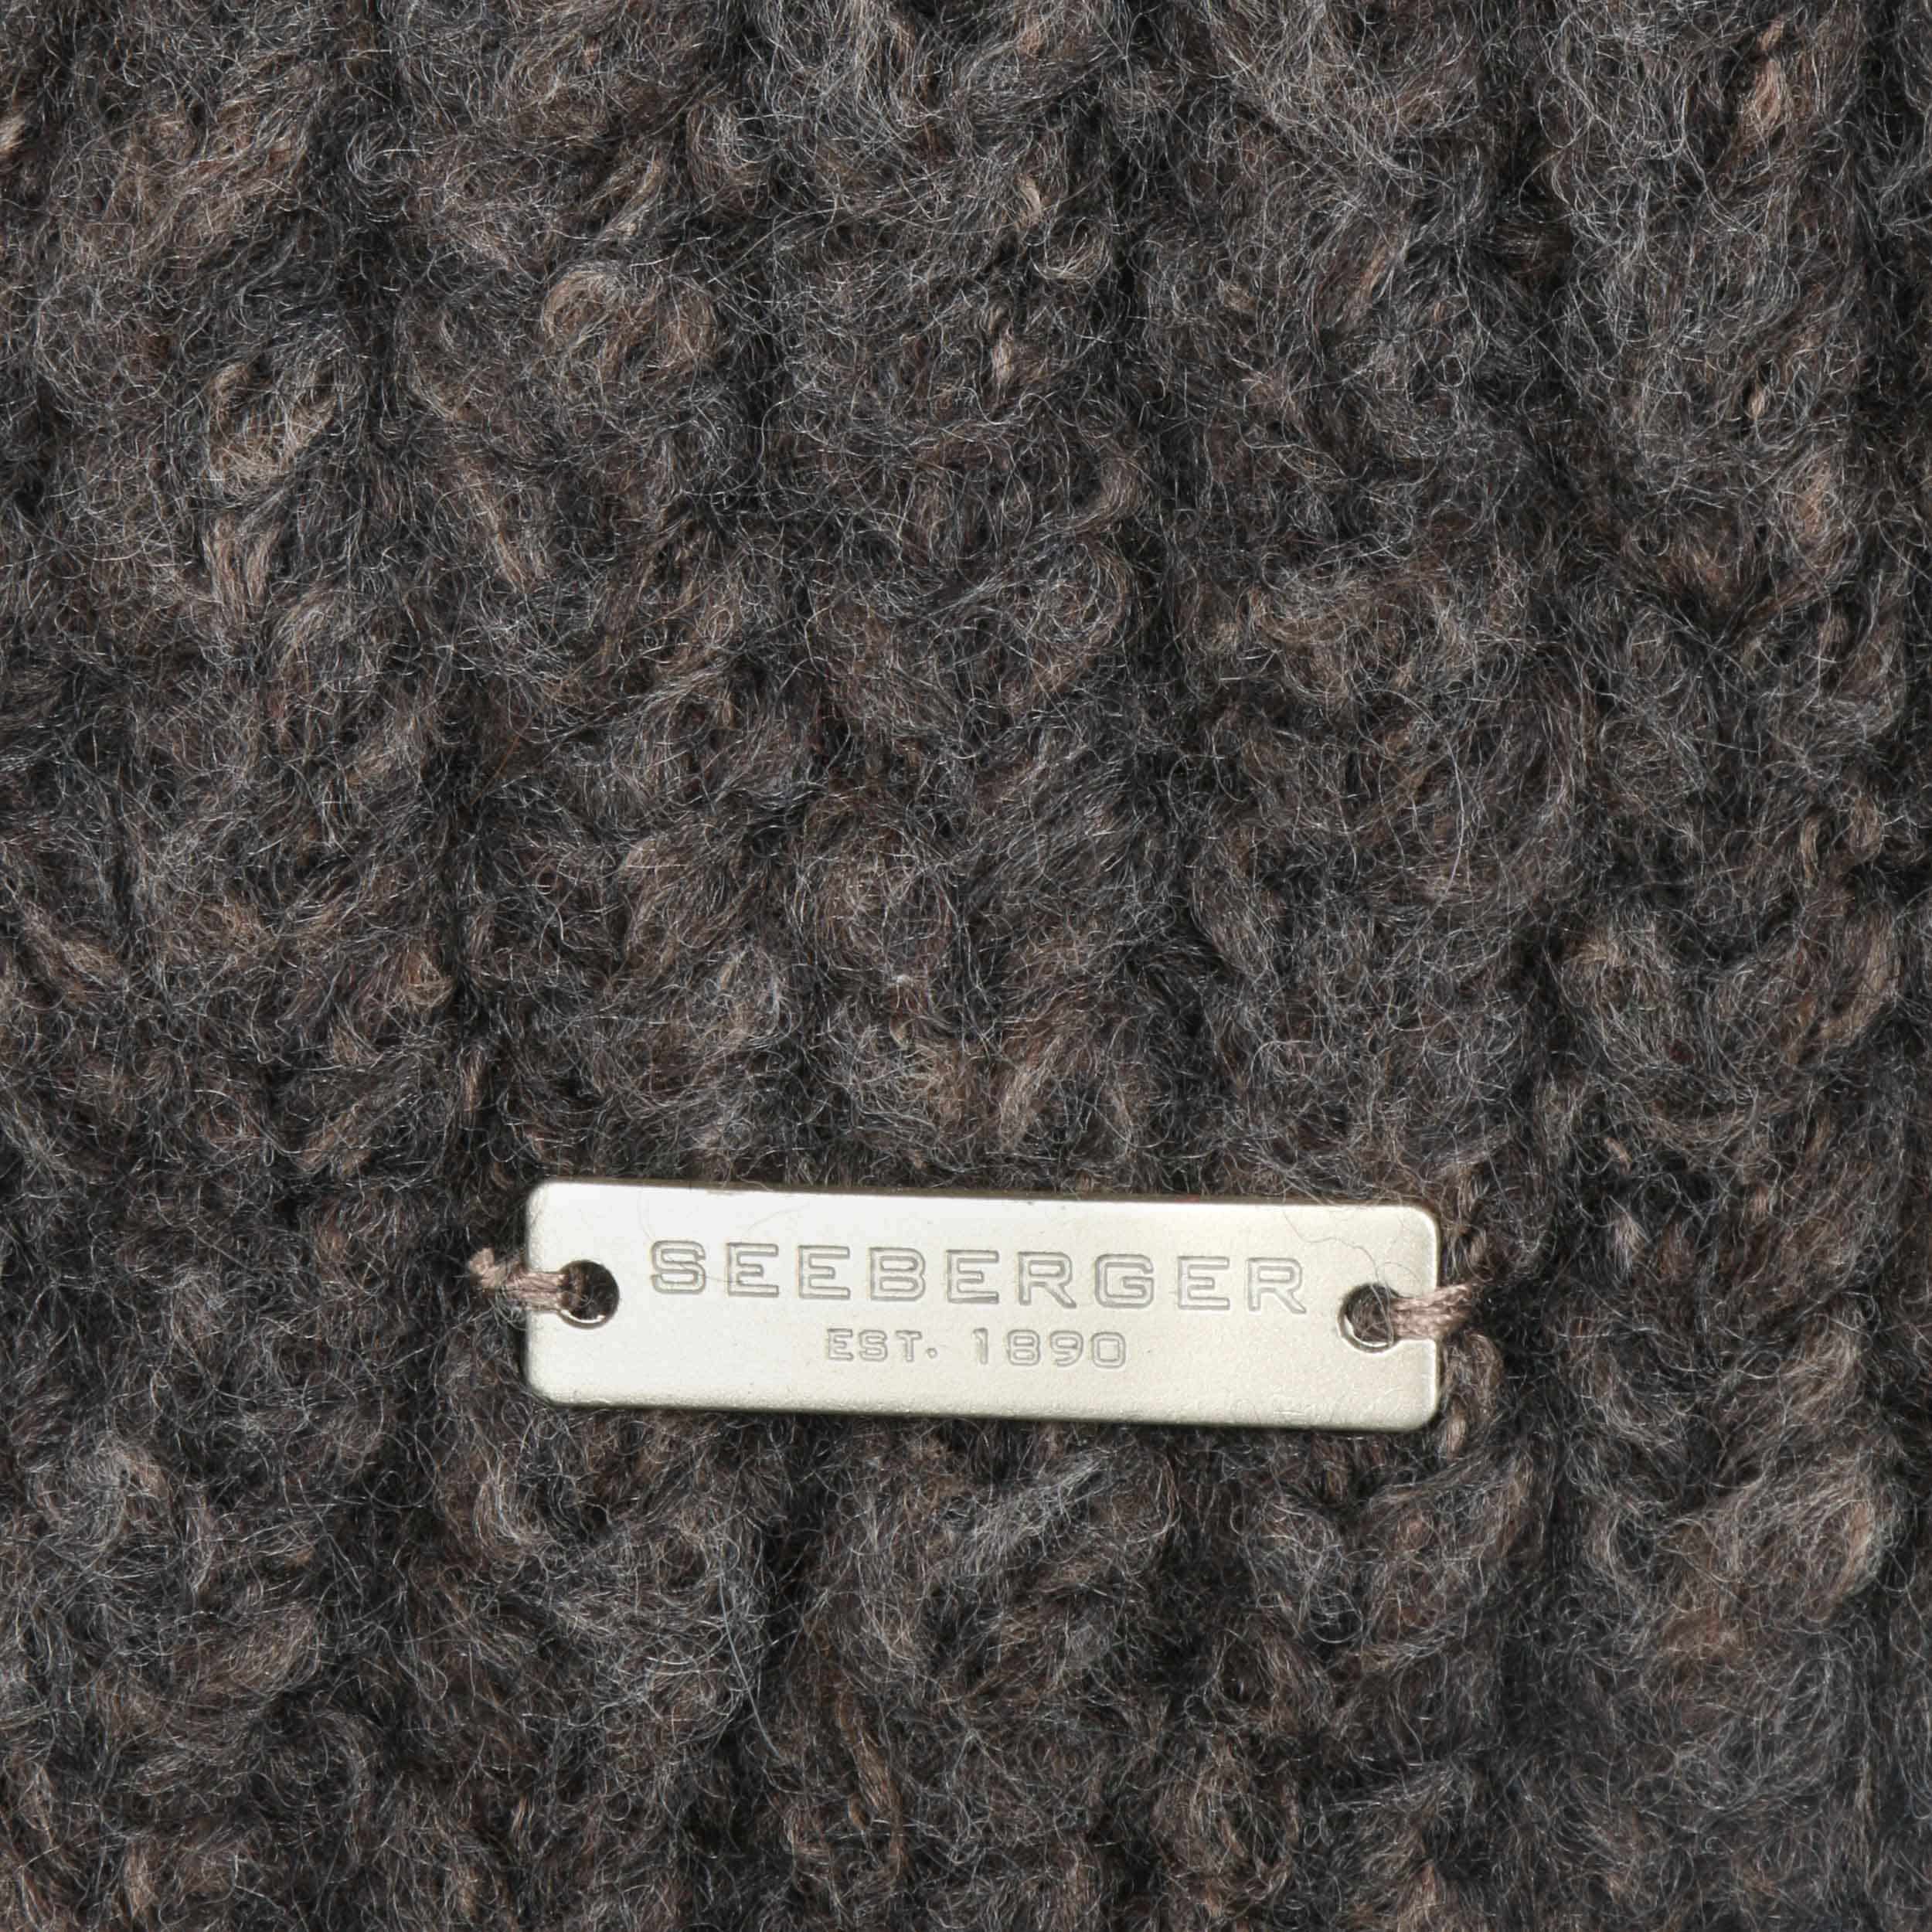 Jacquard Glitter Knit Scarf by Seeberger - 65,95 €